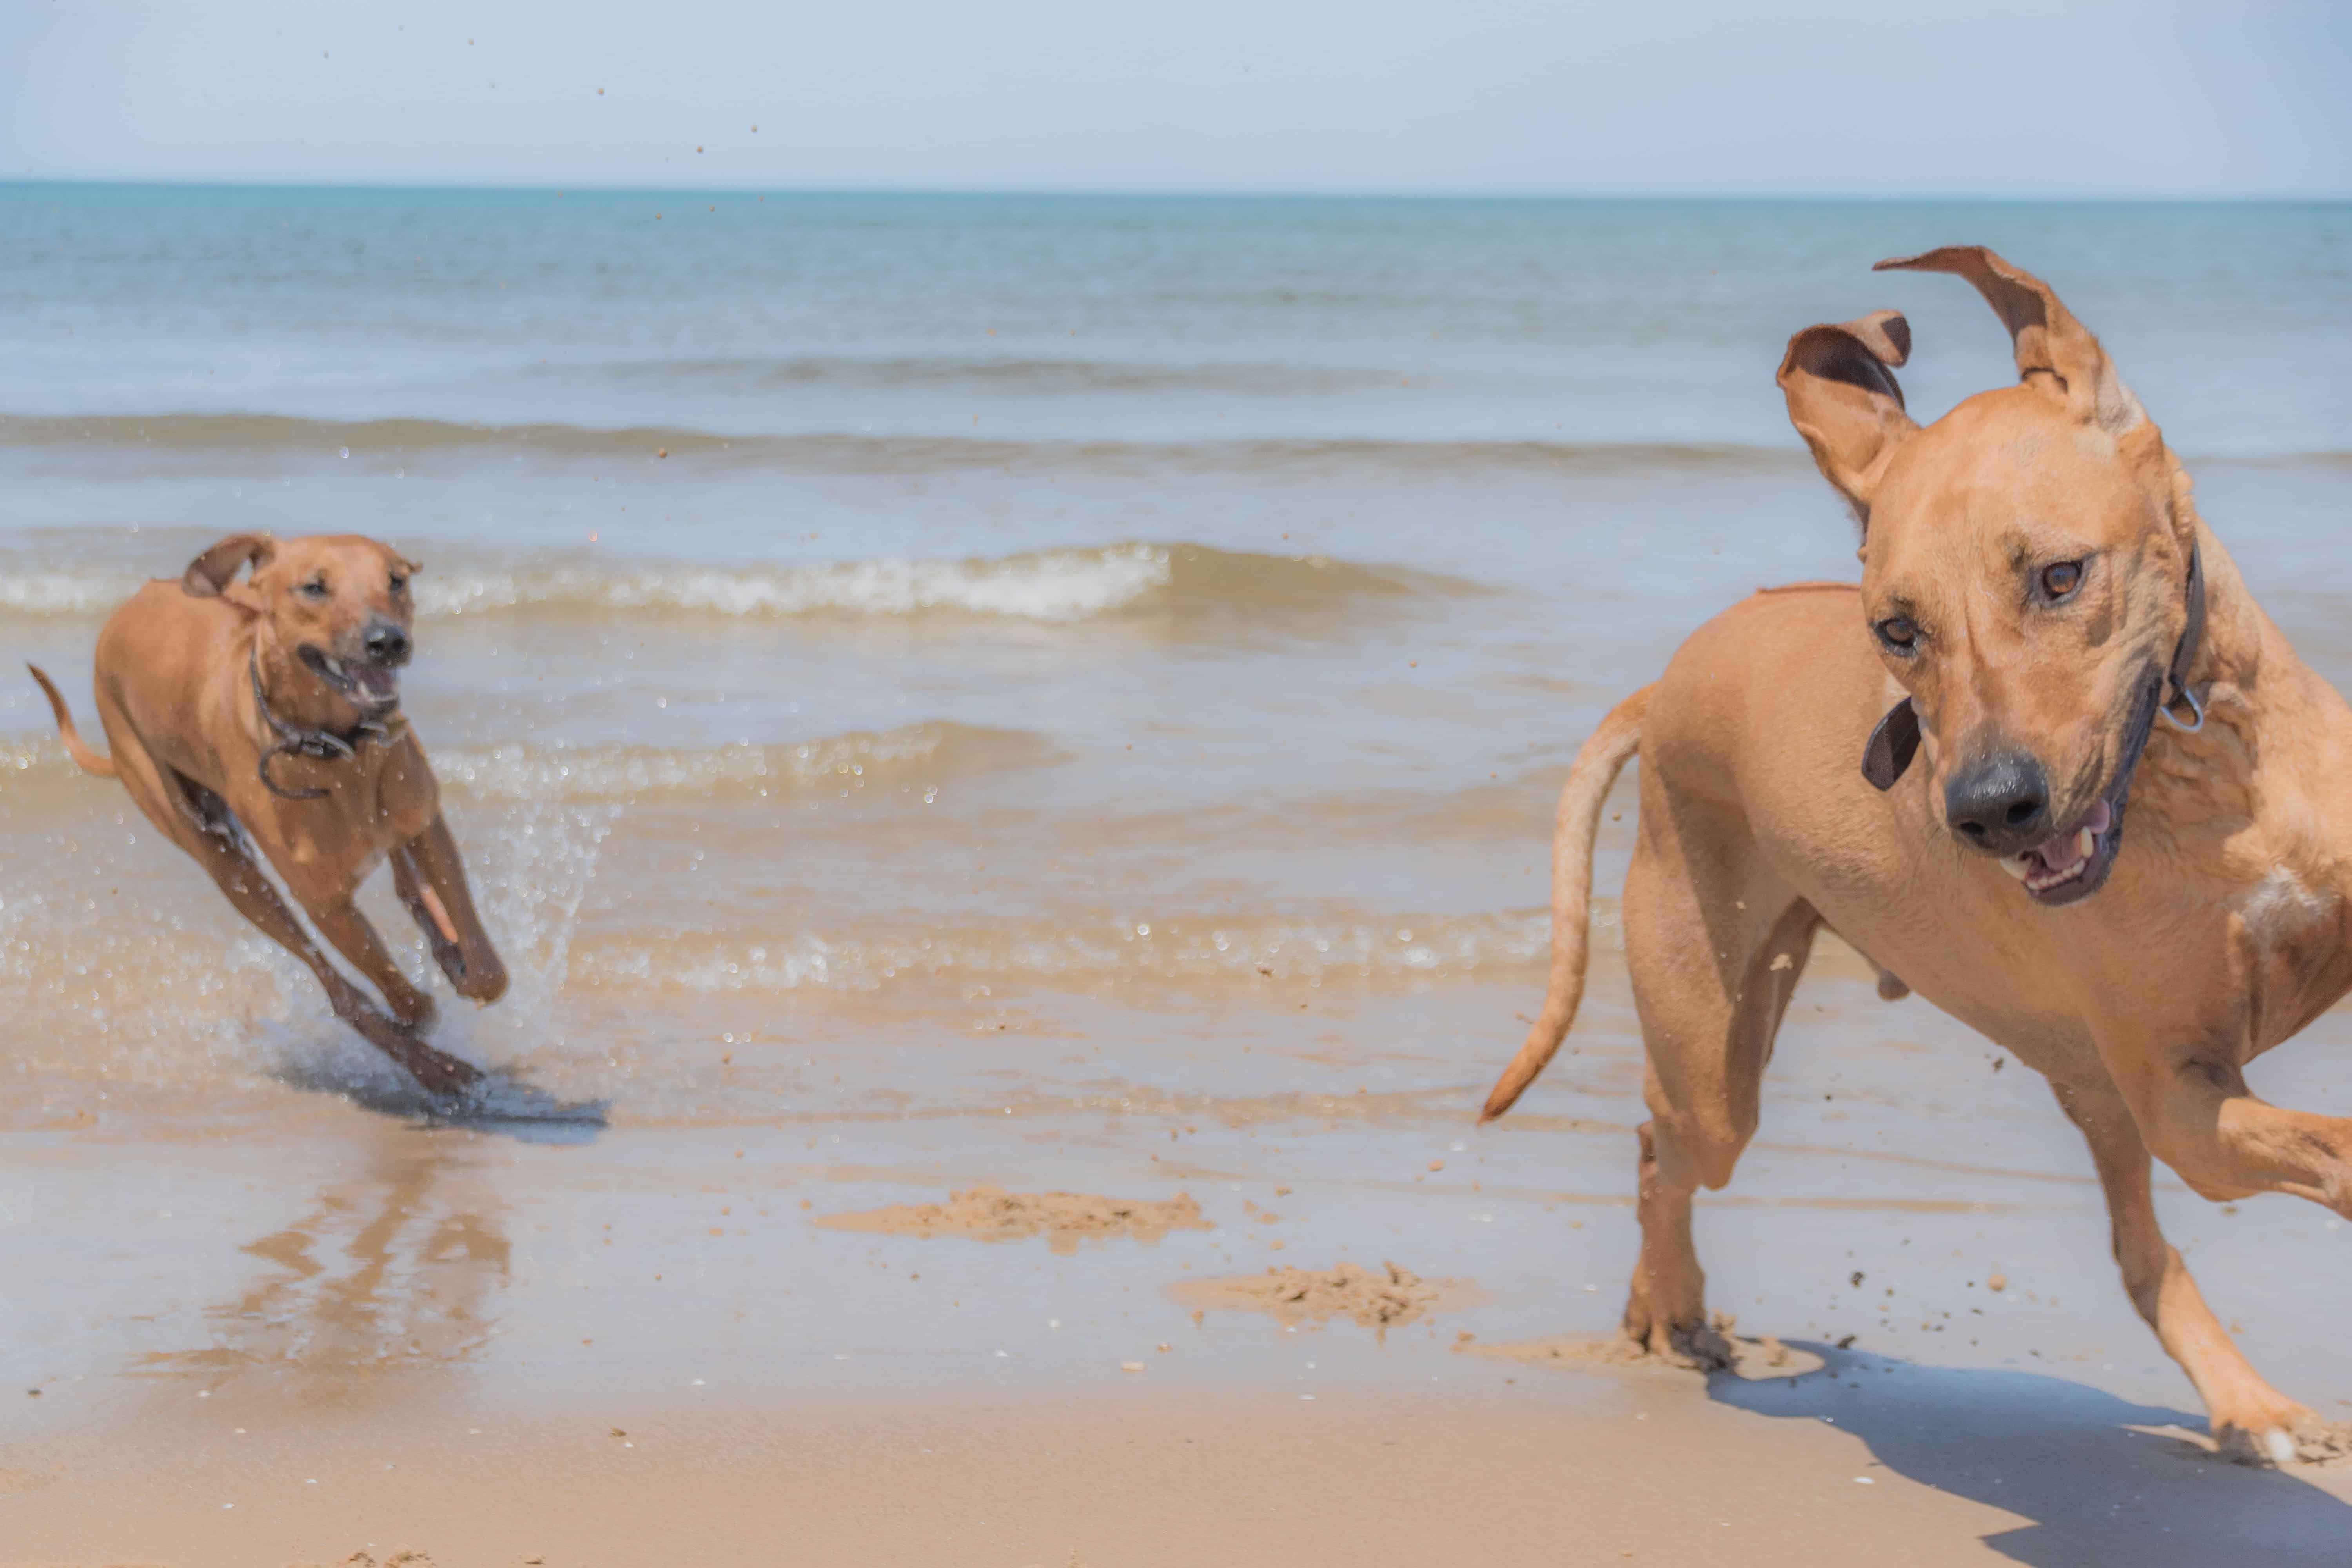 Rhodesian Ridgeback, chicago, montrose dog beach, adventure, cute